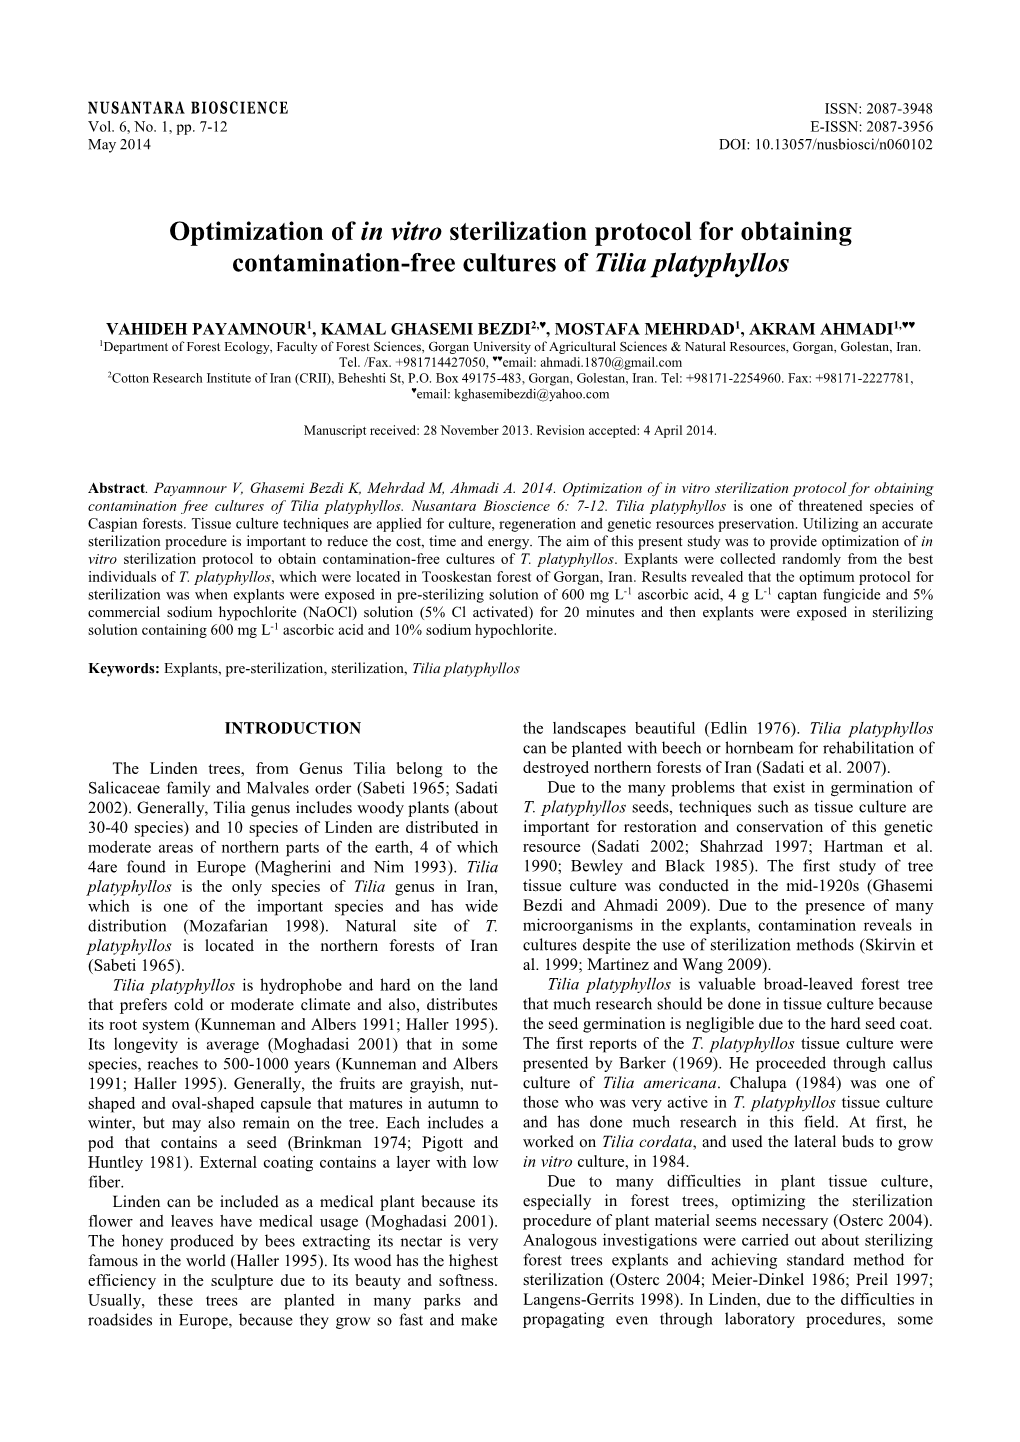 Optimization of in Vitro Sterilization Protocol for Obtaining Contamination-Free Cultures of Tilia Platyphyllos